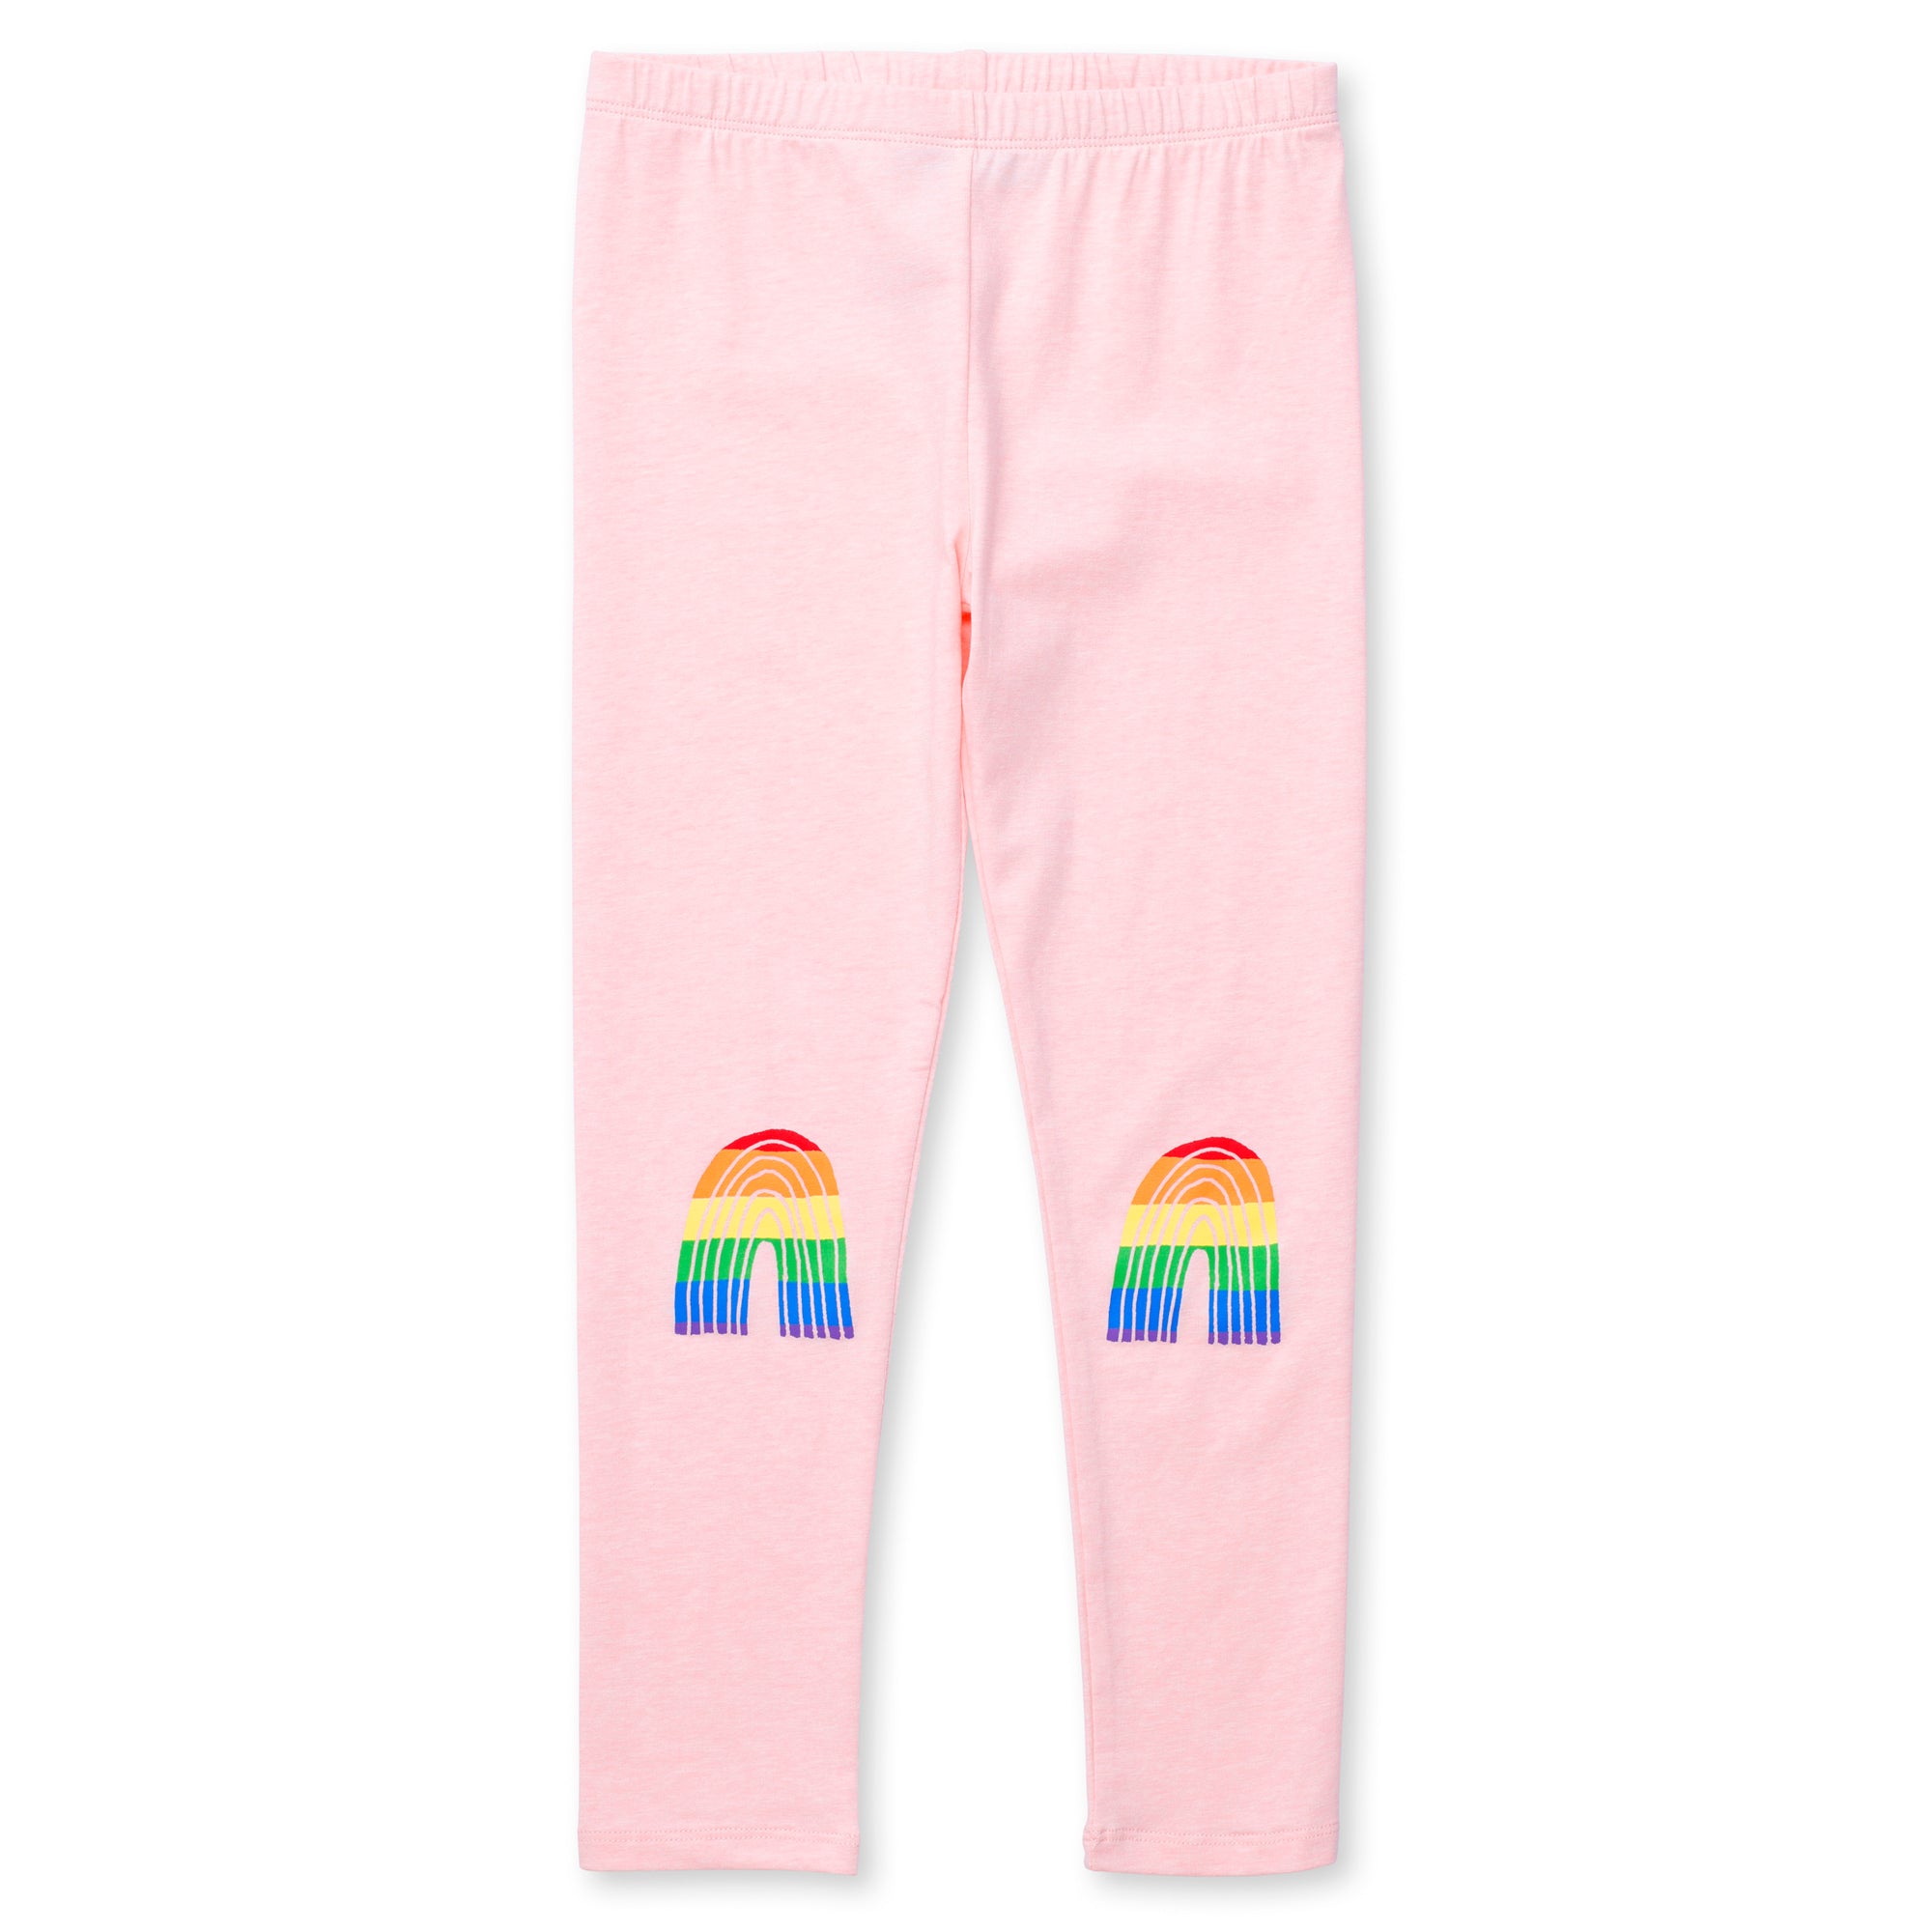 Stripey Rainbow Tights (Pink Marle)